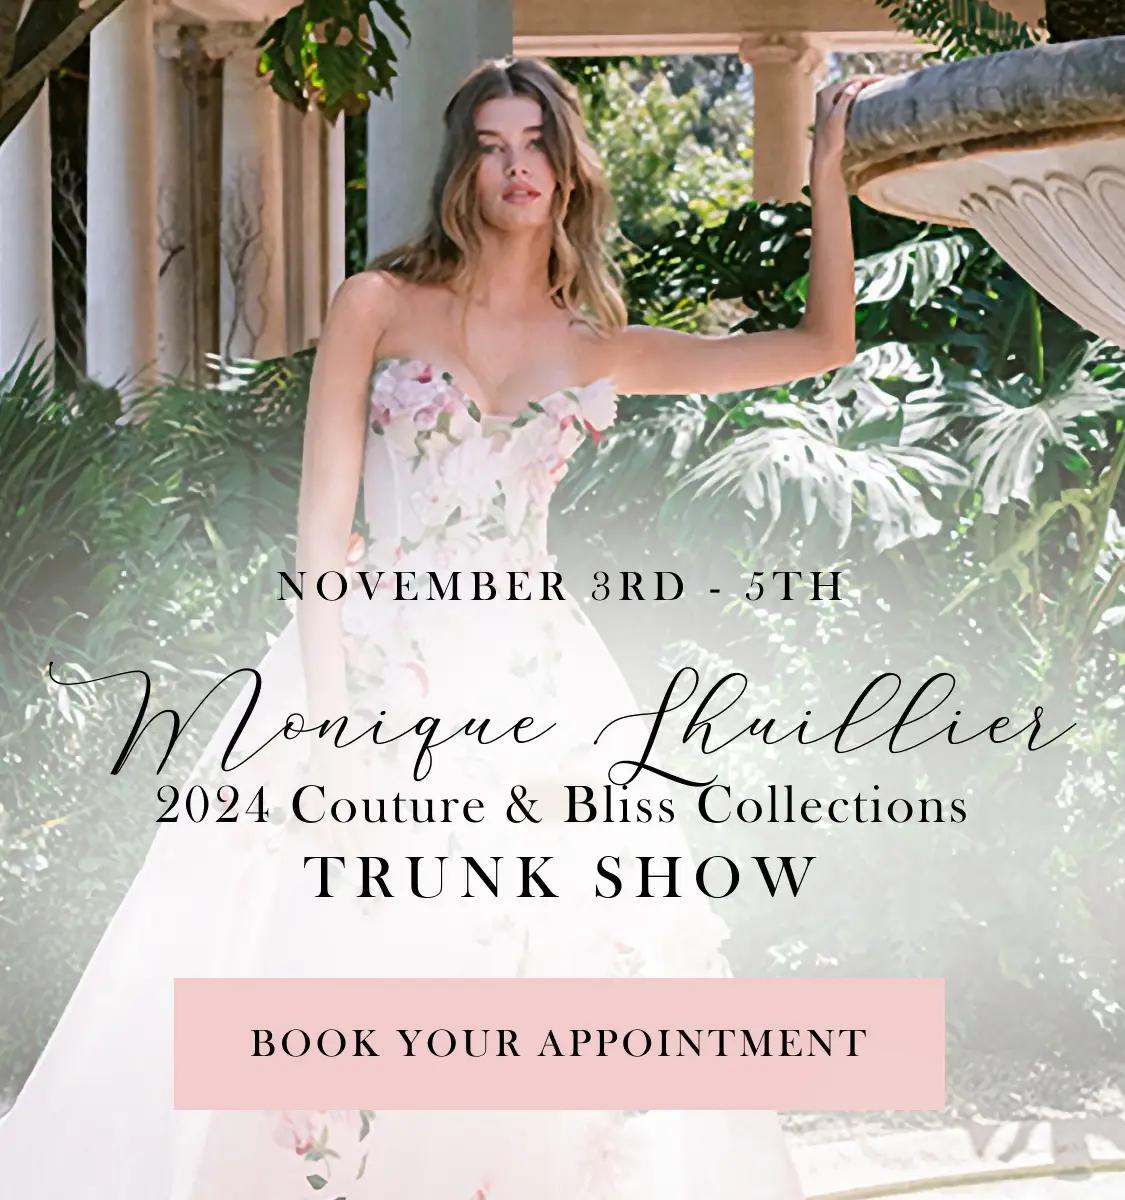 Monique Lhuillier 2024 Couture & Bliss Collections Trunk Show Banner Mobile